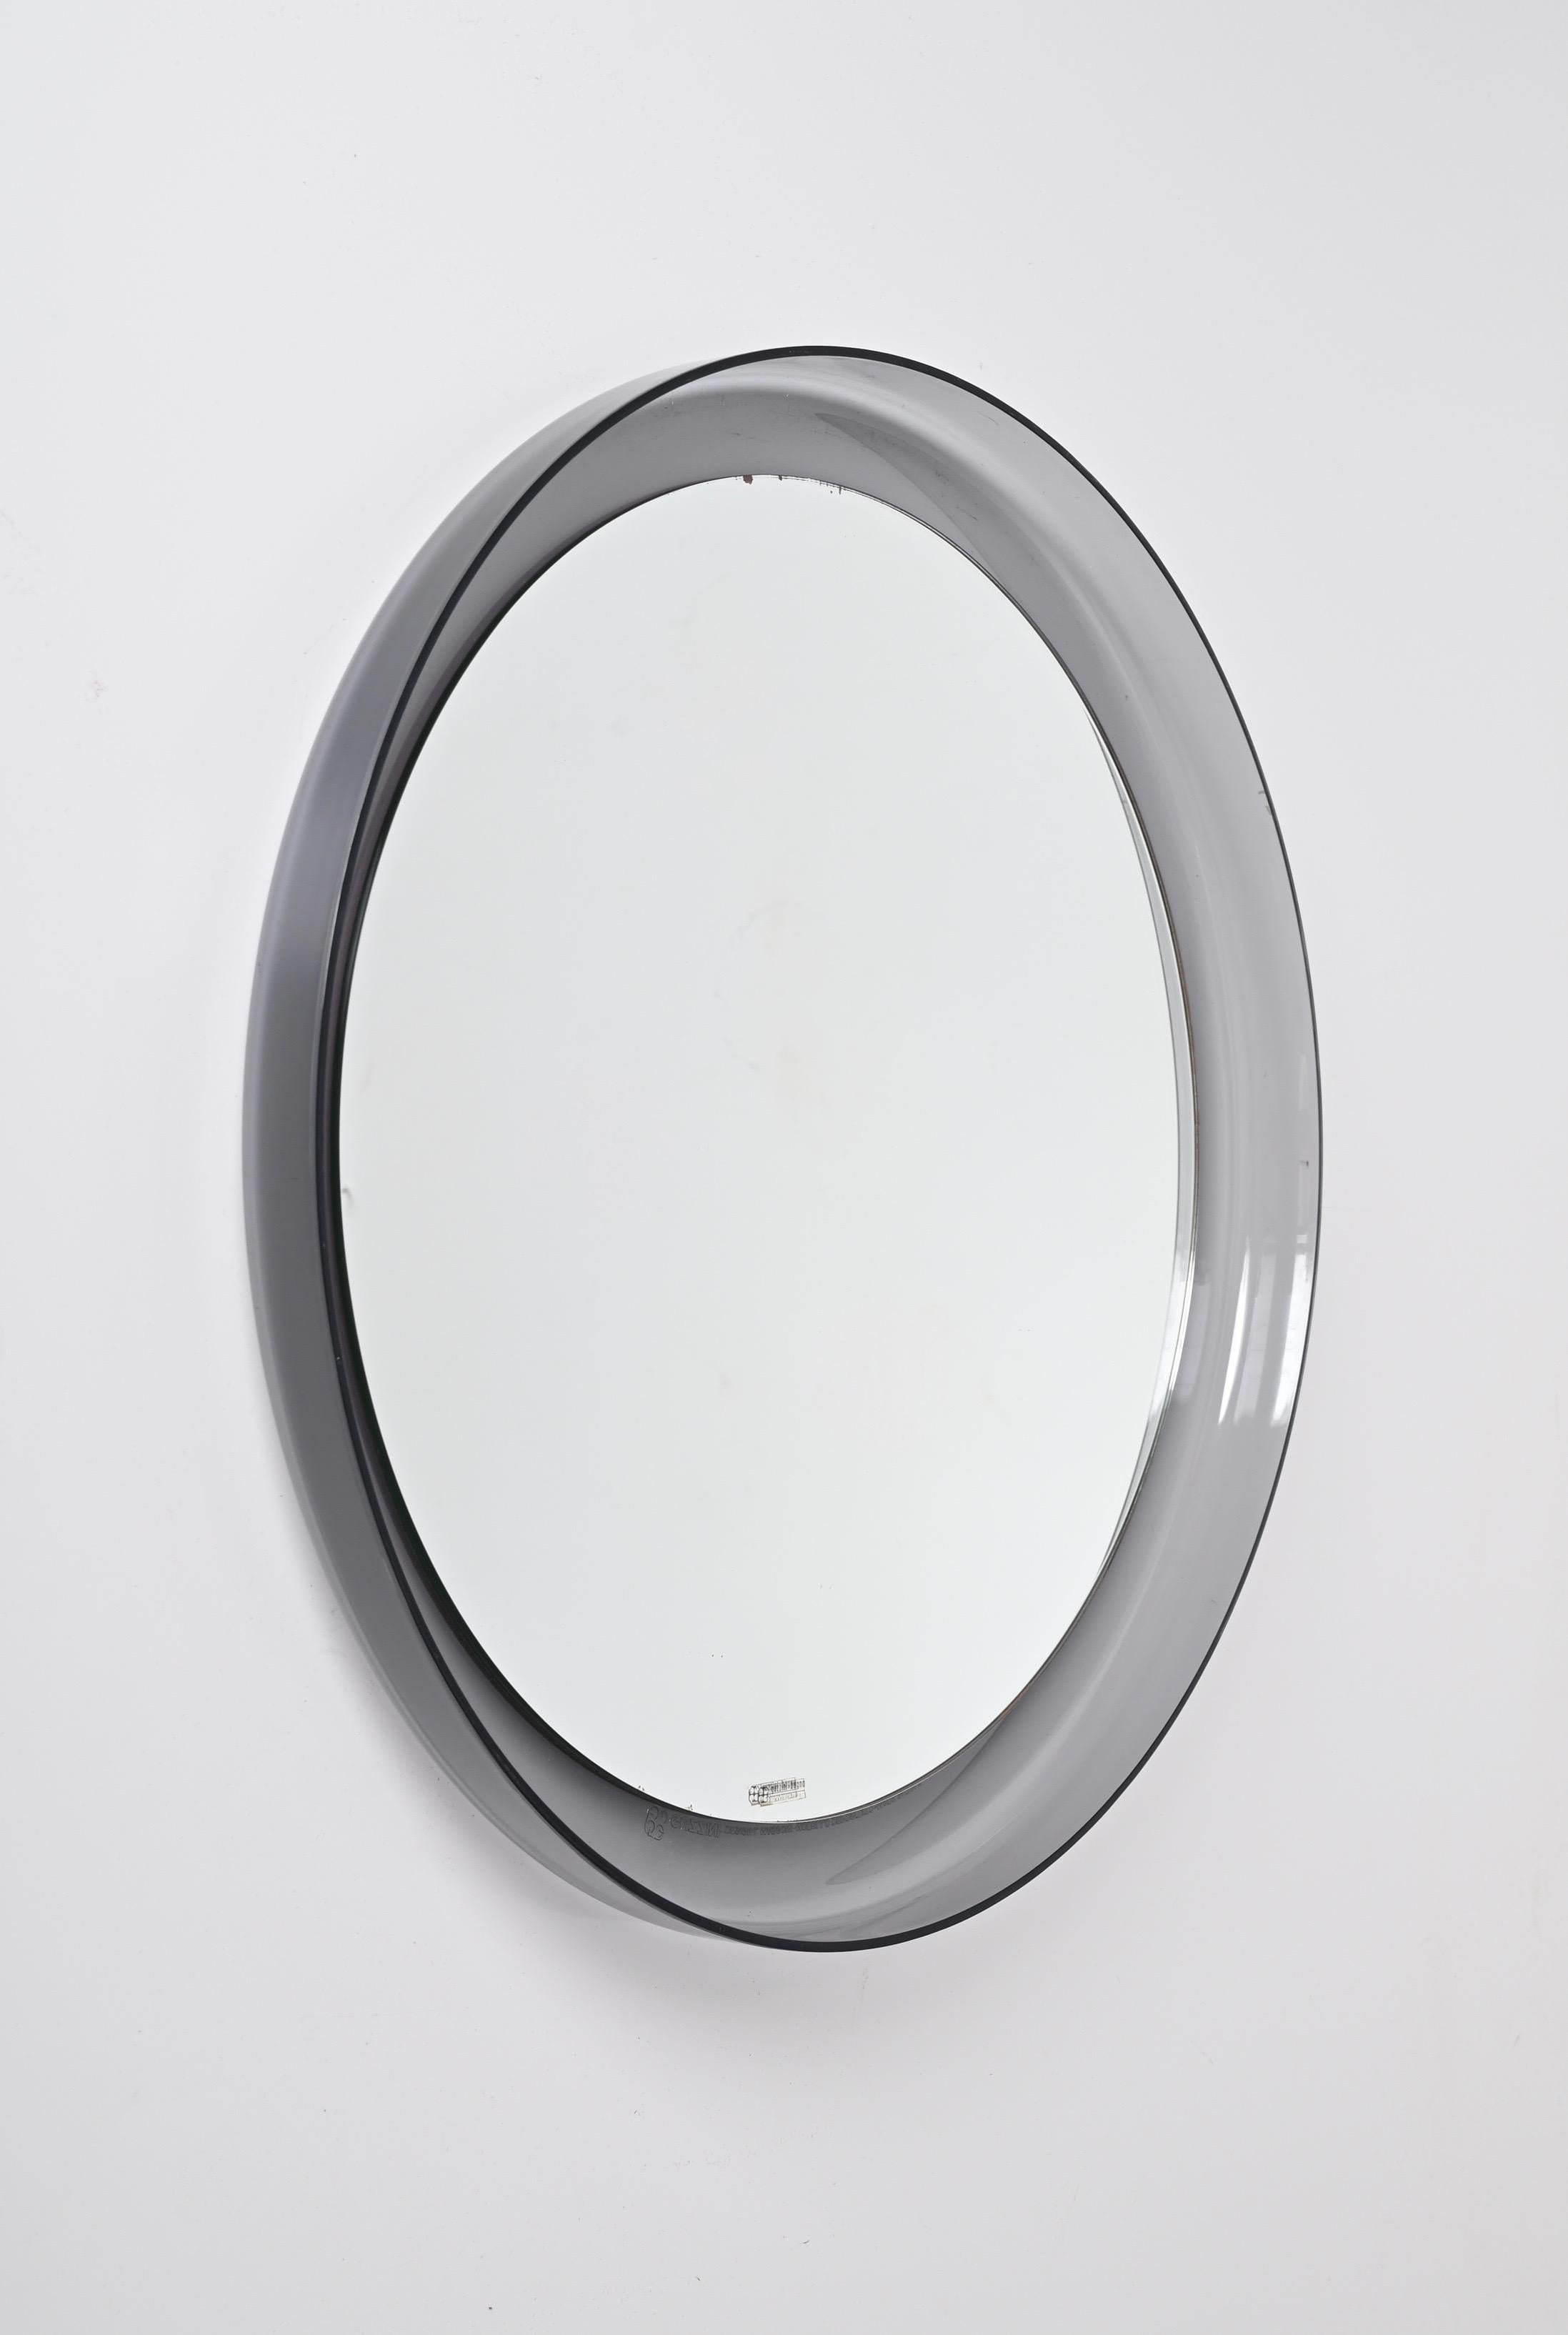 Luigi Massoni for Guzzini Clear Lucite Round Wall Mirror, Italy, 1960s For Sale 3